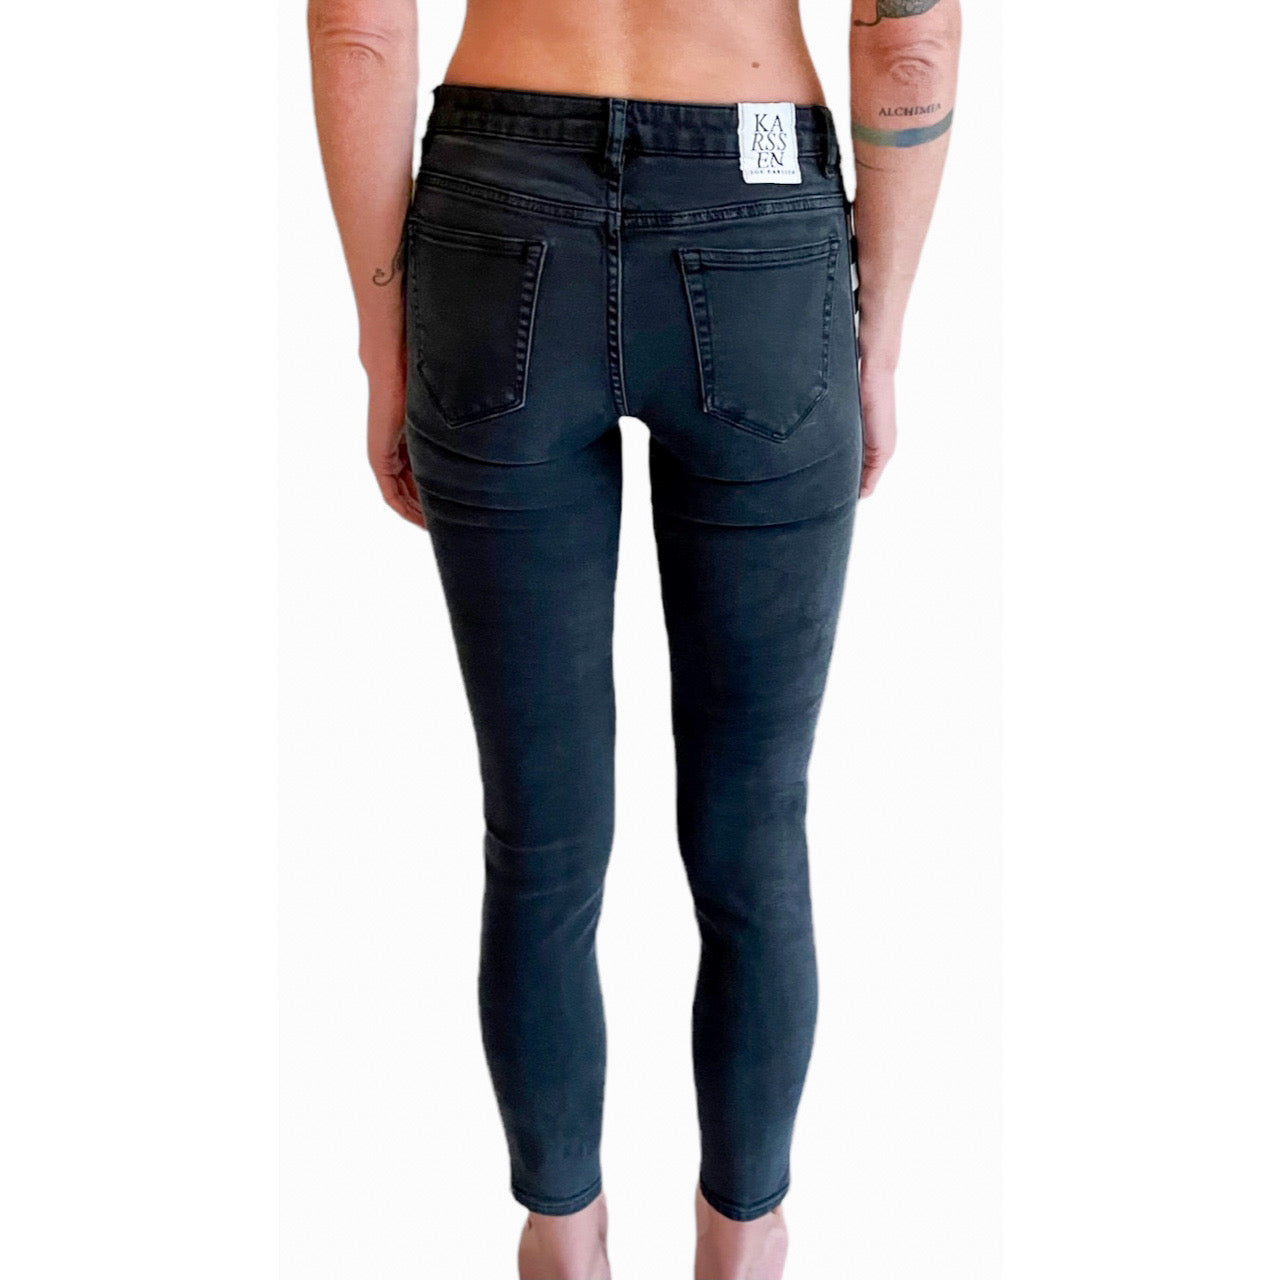 Zoe Karssen Checked Side Jeans